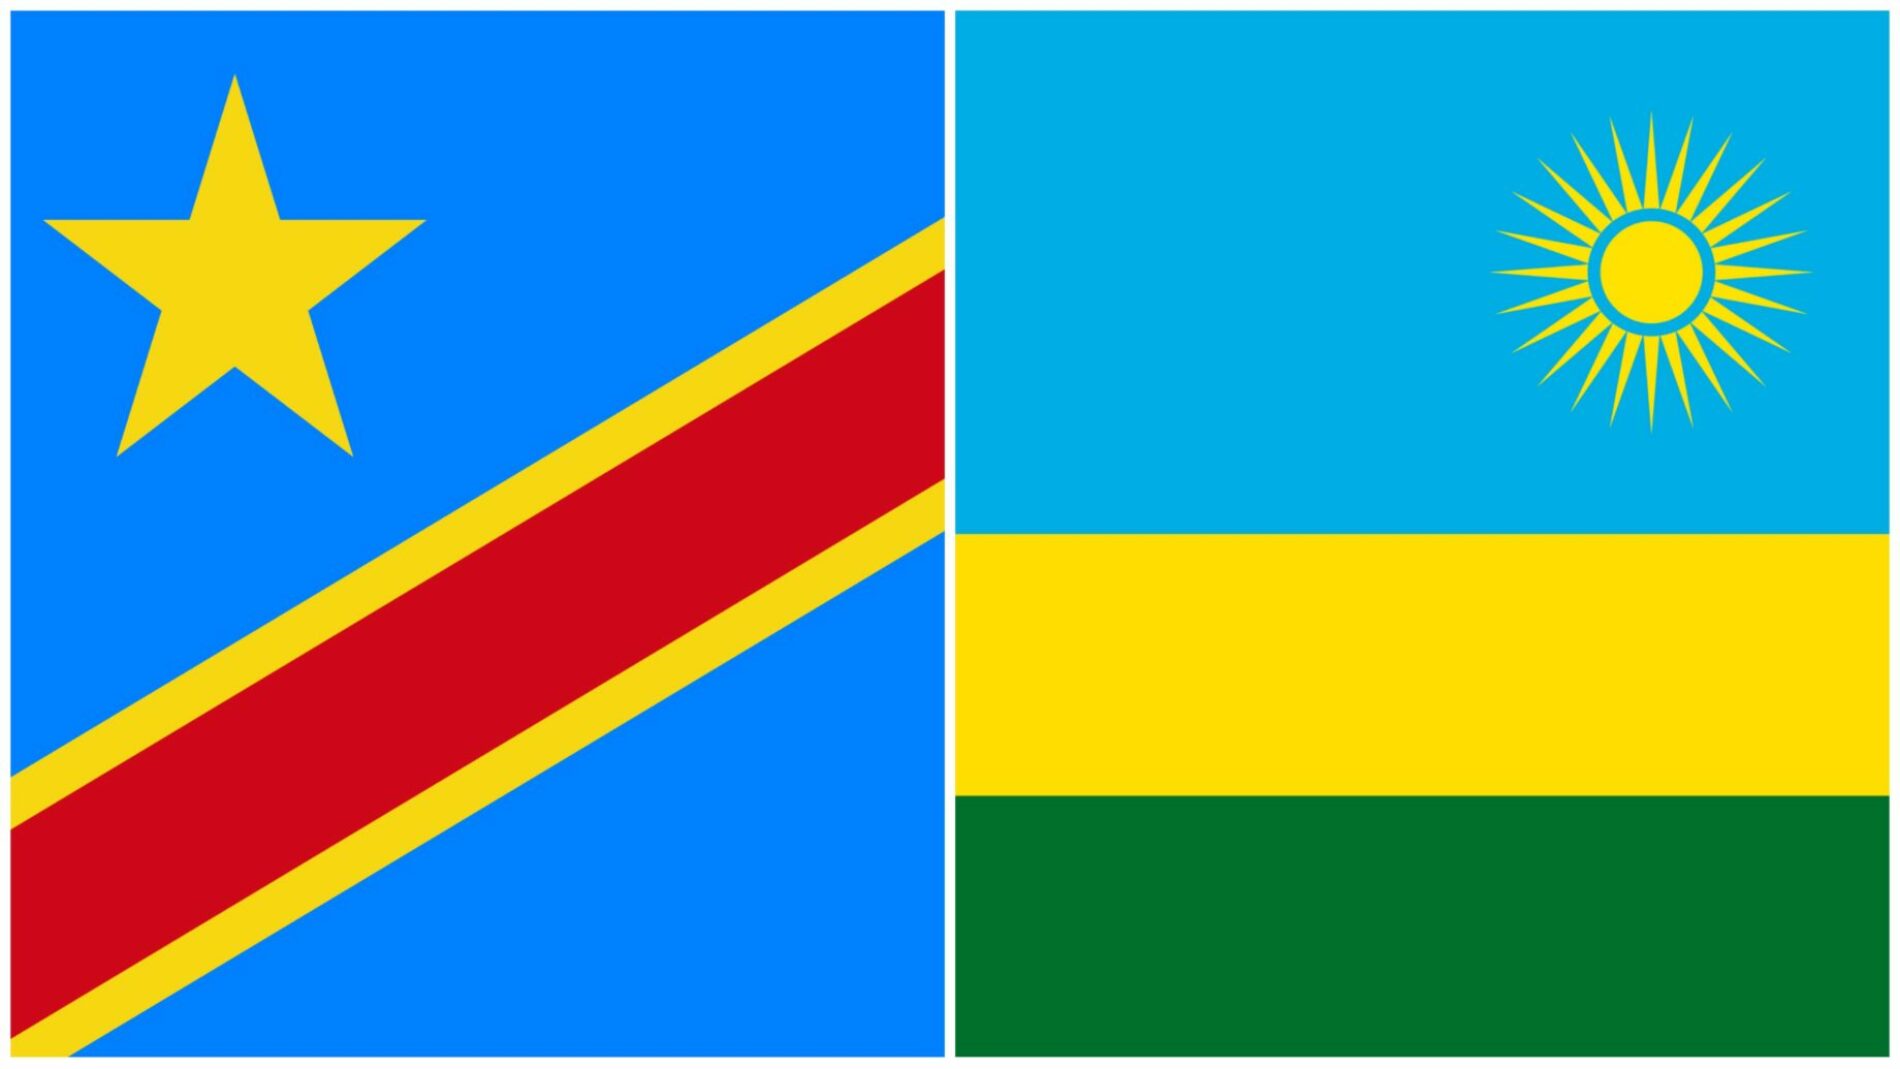 Rwanda-DRC: Congolese fighter plane violated Rwandan airspace (press release)